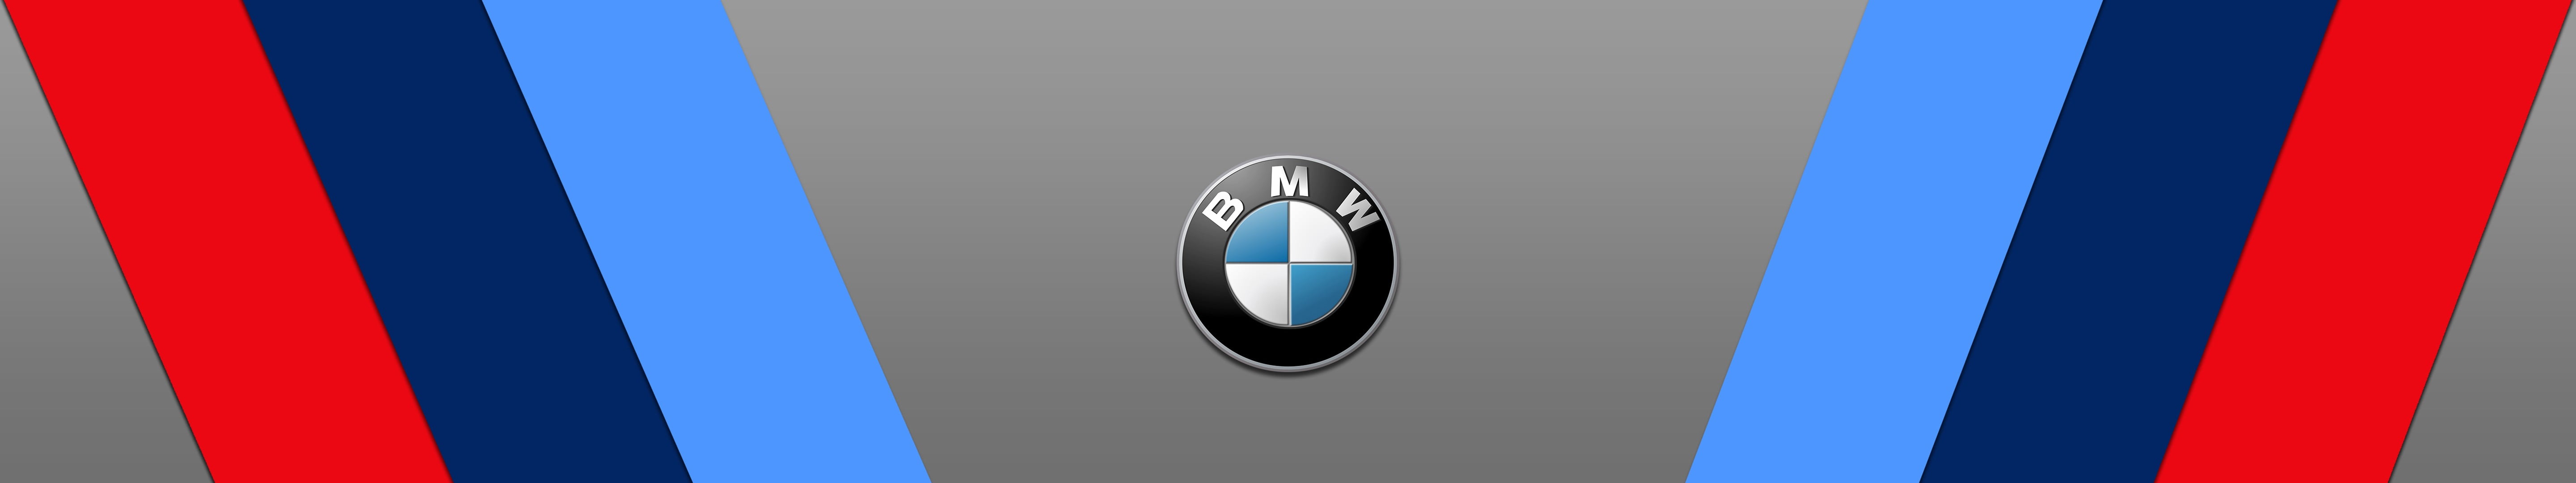 BMW logo, BMW, logo, brand, vehicle